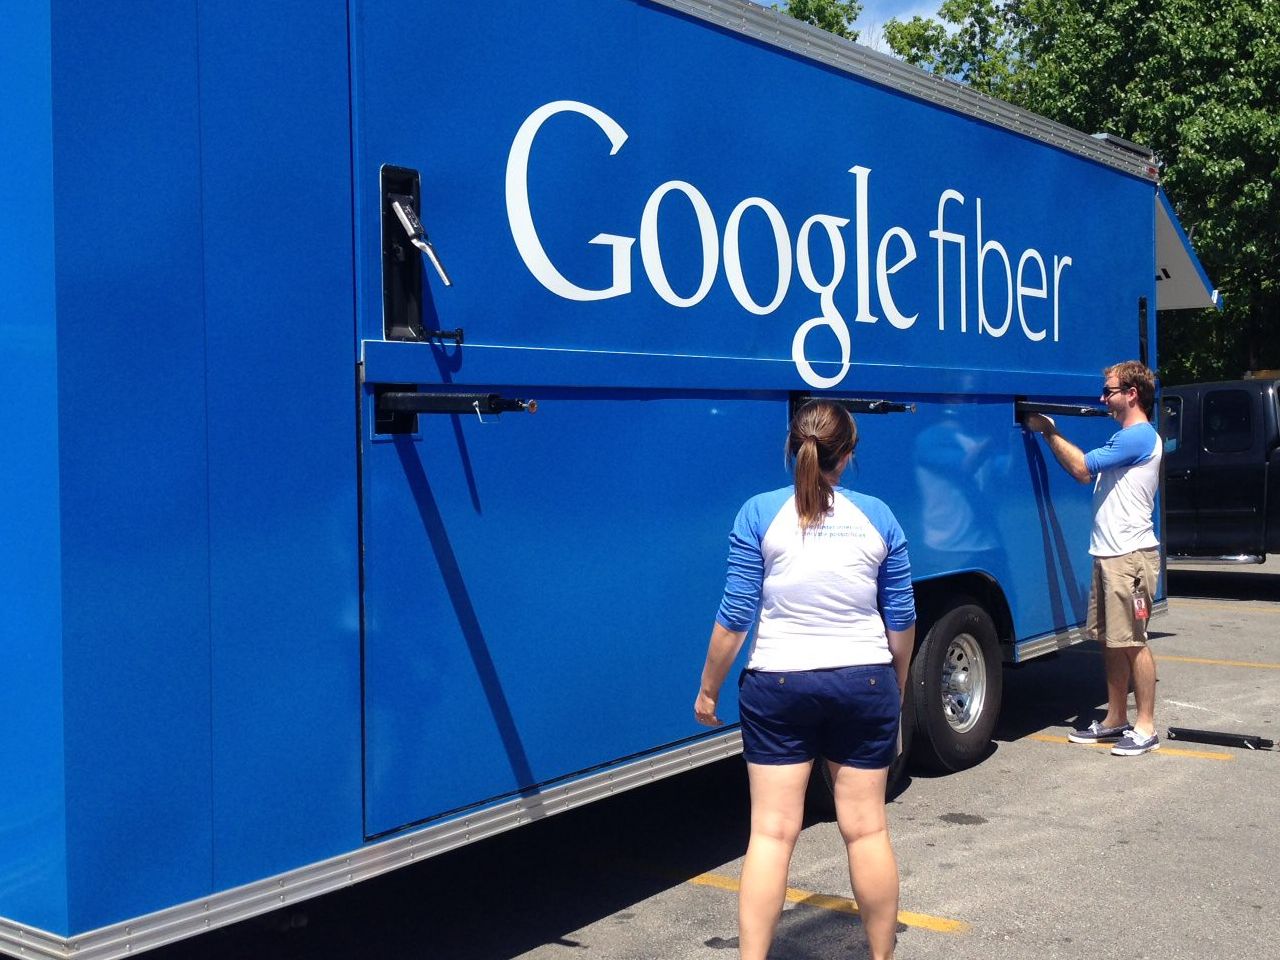 Google Fiber may expand to Oklahoma City, Jacksonville and Tampa